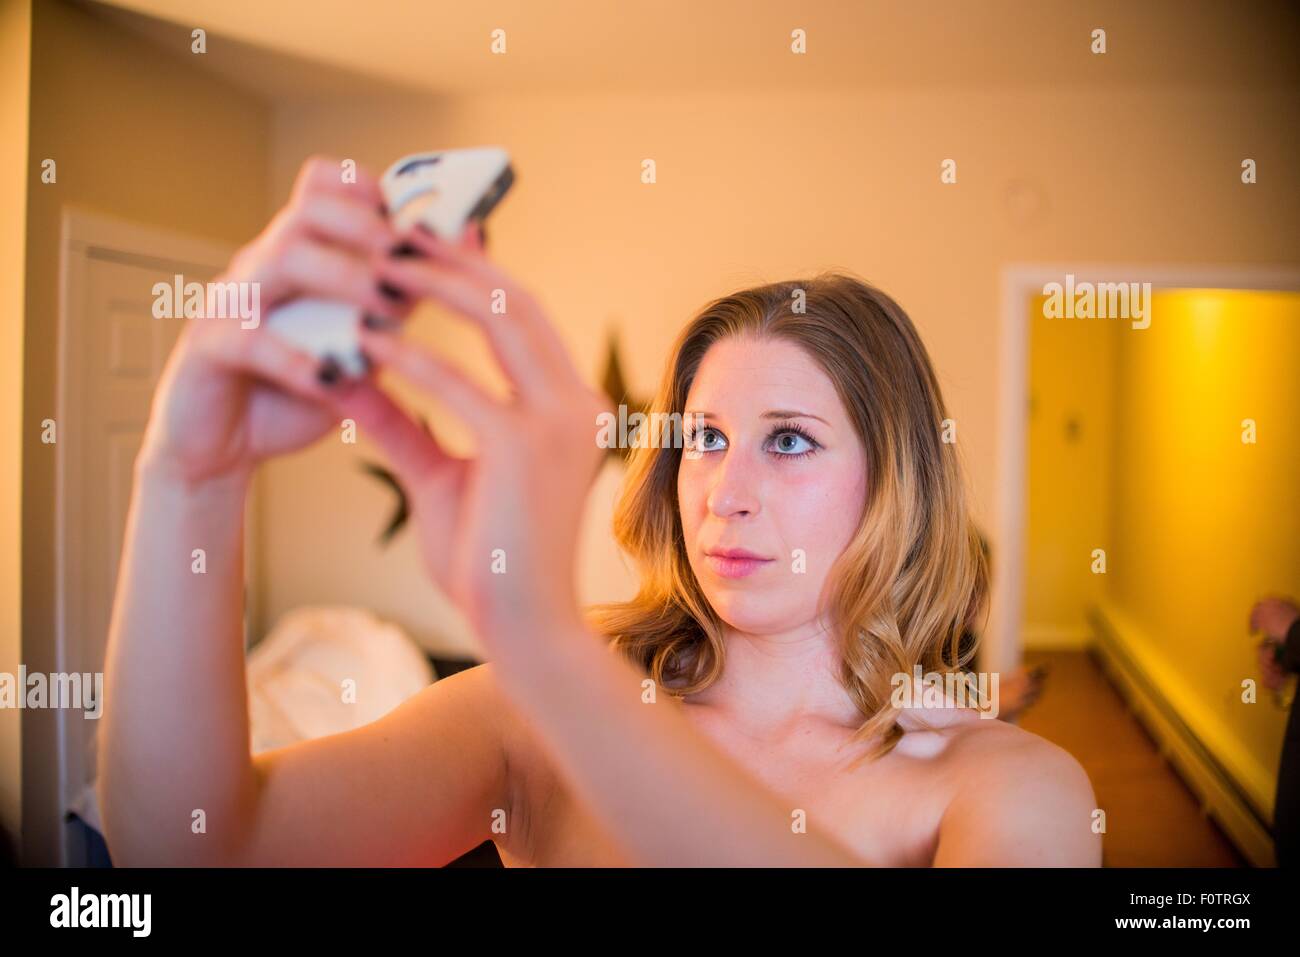 Young woman taking smartphone selfie in hallway Stock Photo